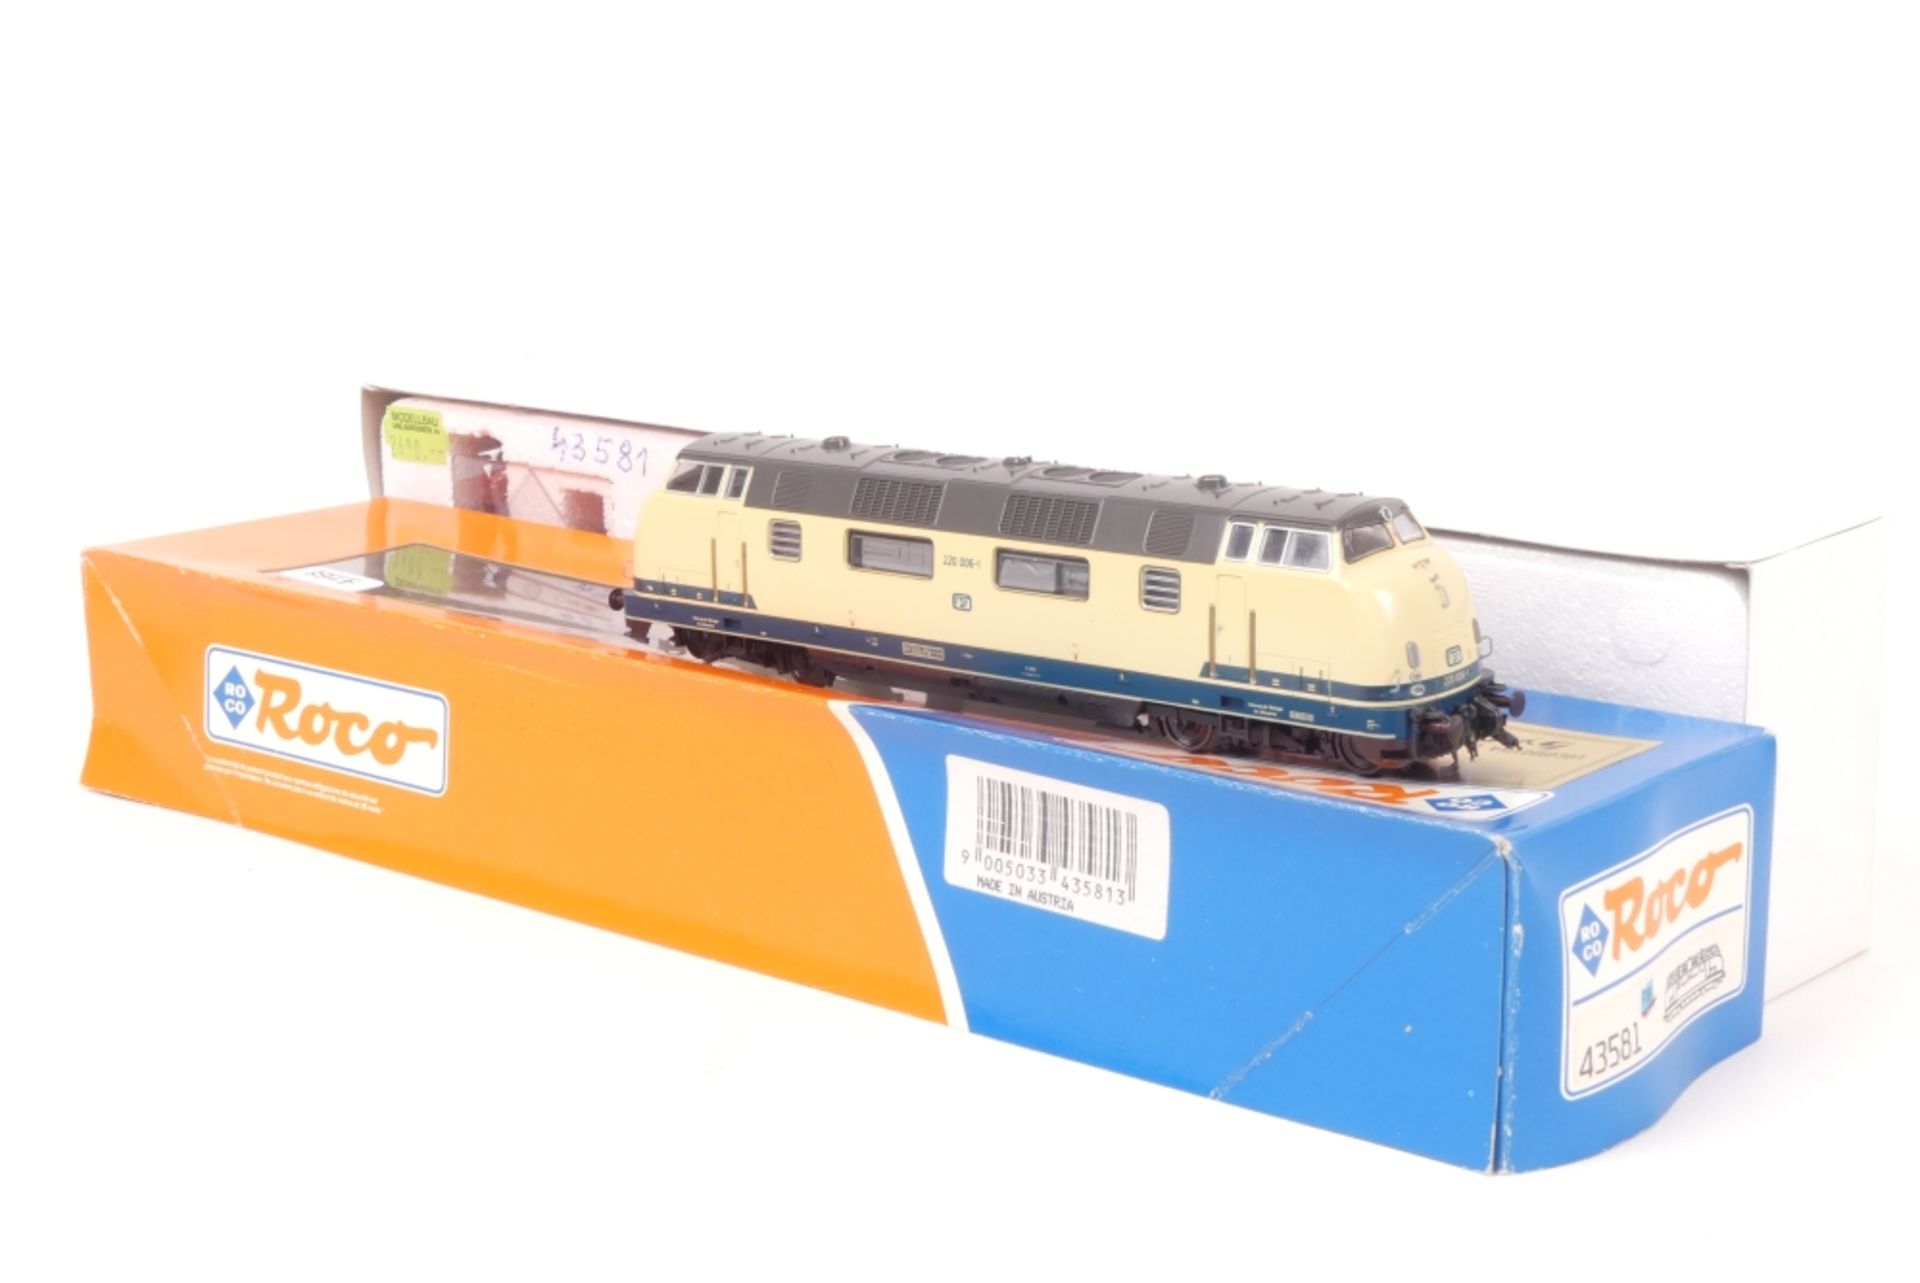 Roco 43581Roco 43581, FSF Diesellok 220 006-1, beige/blau/ grau, limitierte Edition, s